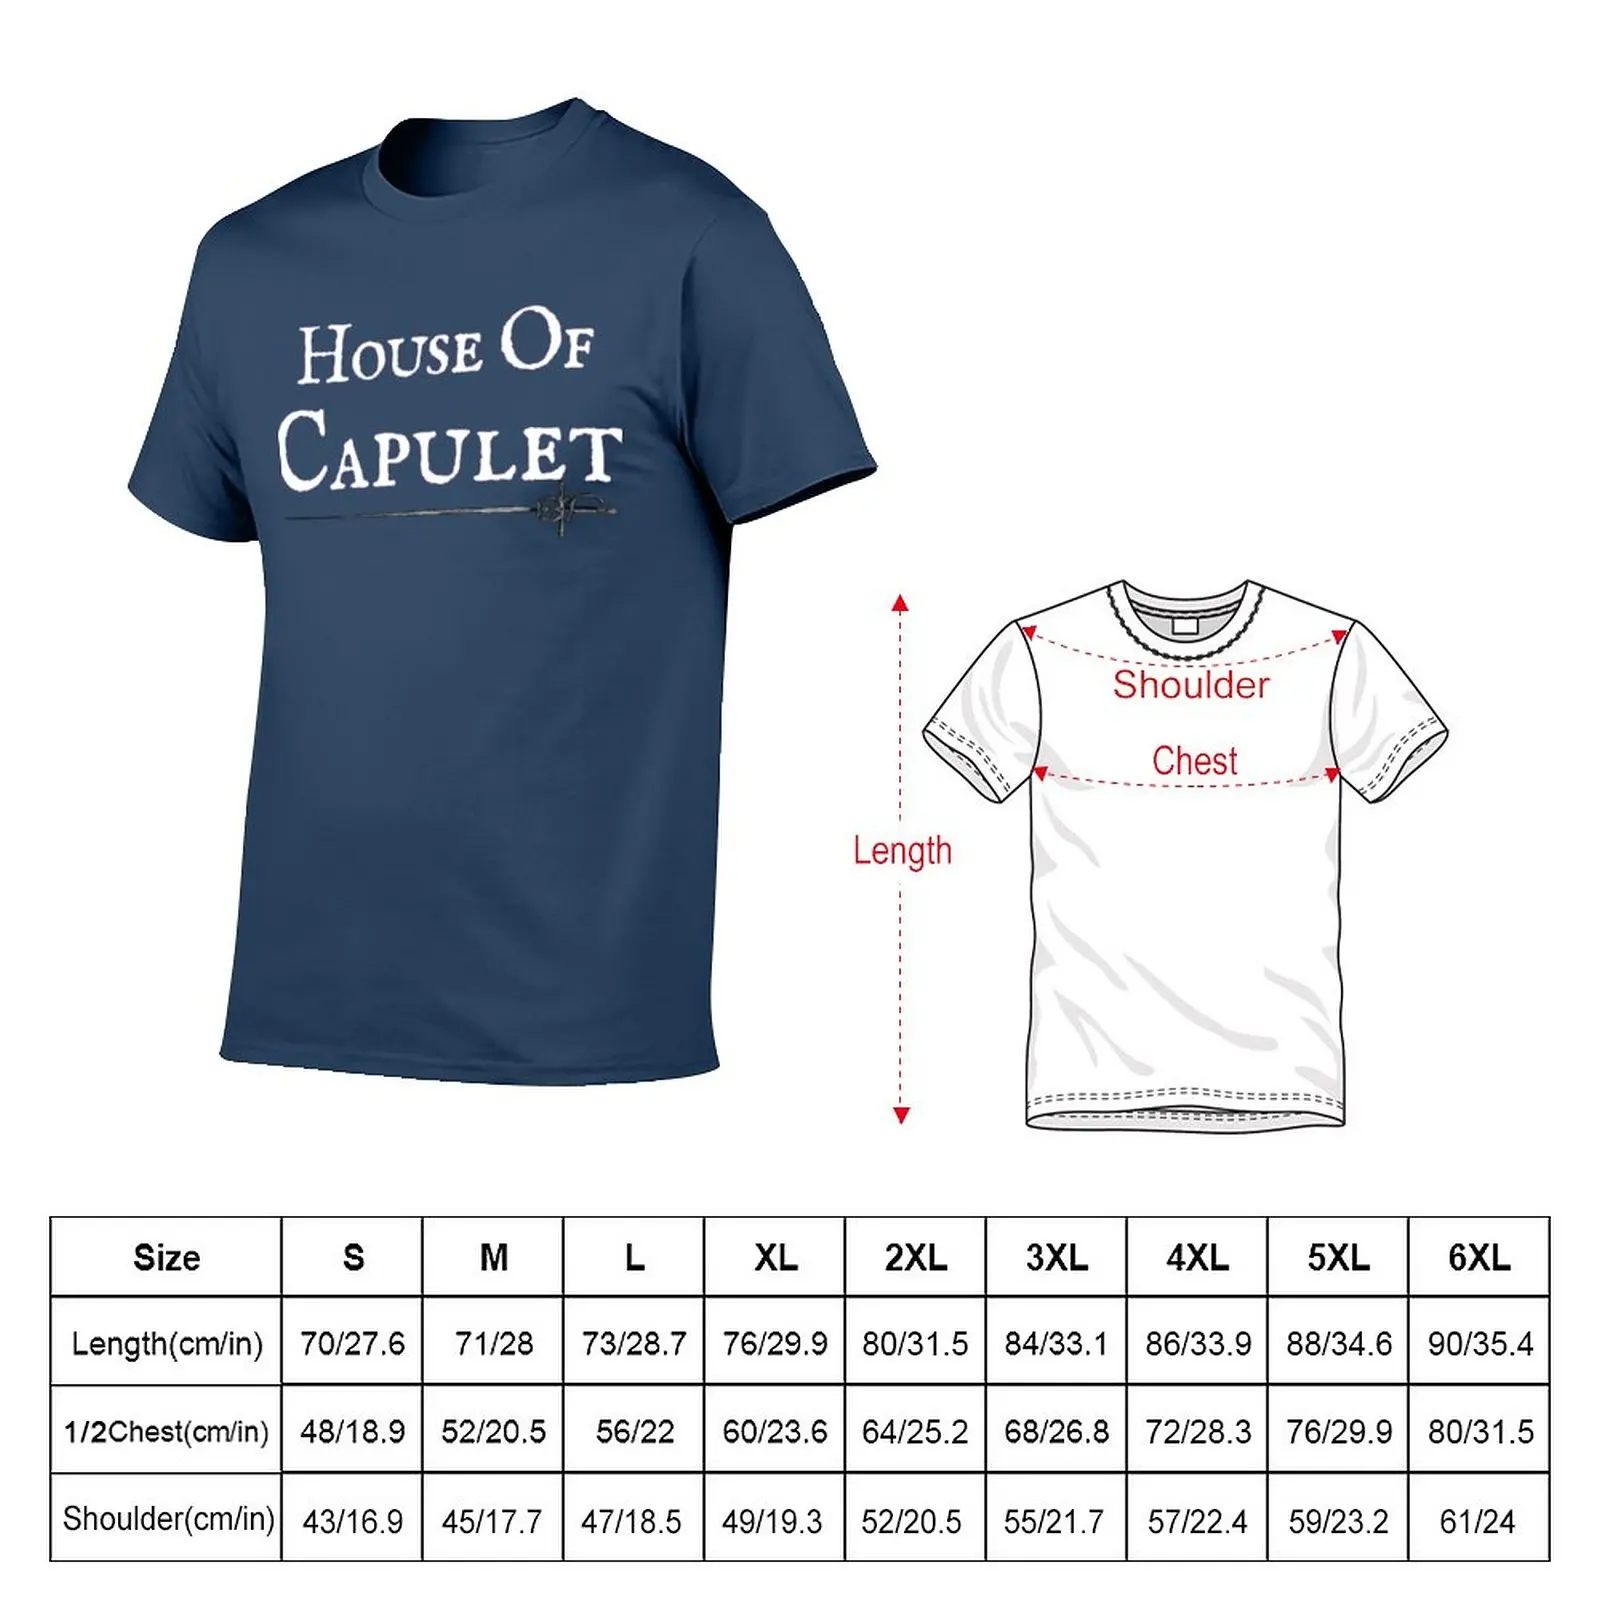 Новая футболка House of Capulet (Light), футболки на заказ, футболки с короткими рукавами в стиле аниме для мужчин Изображение 1